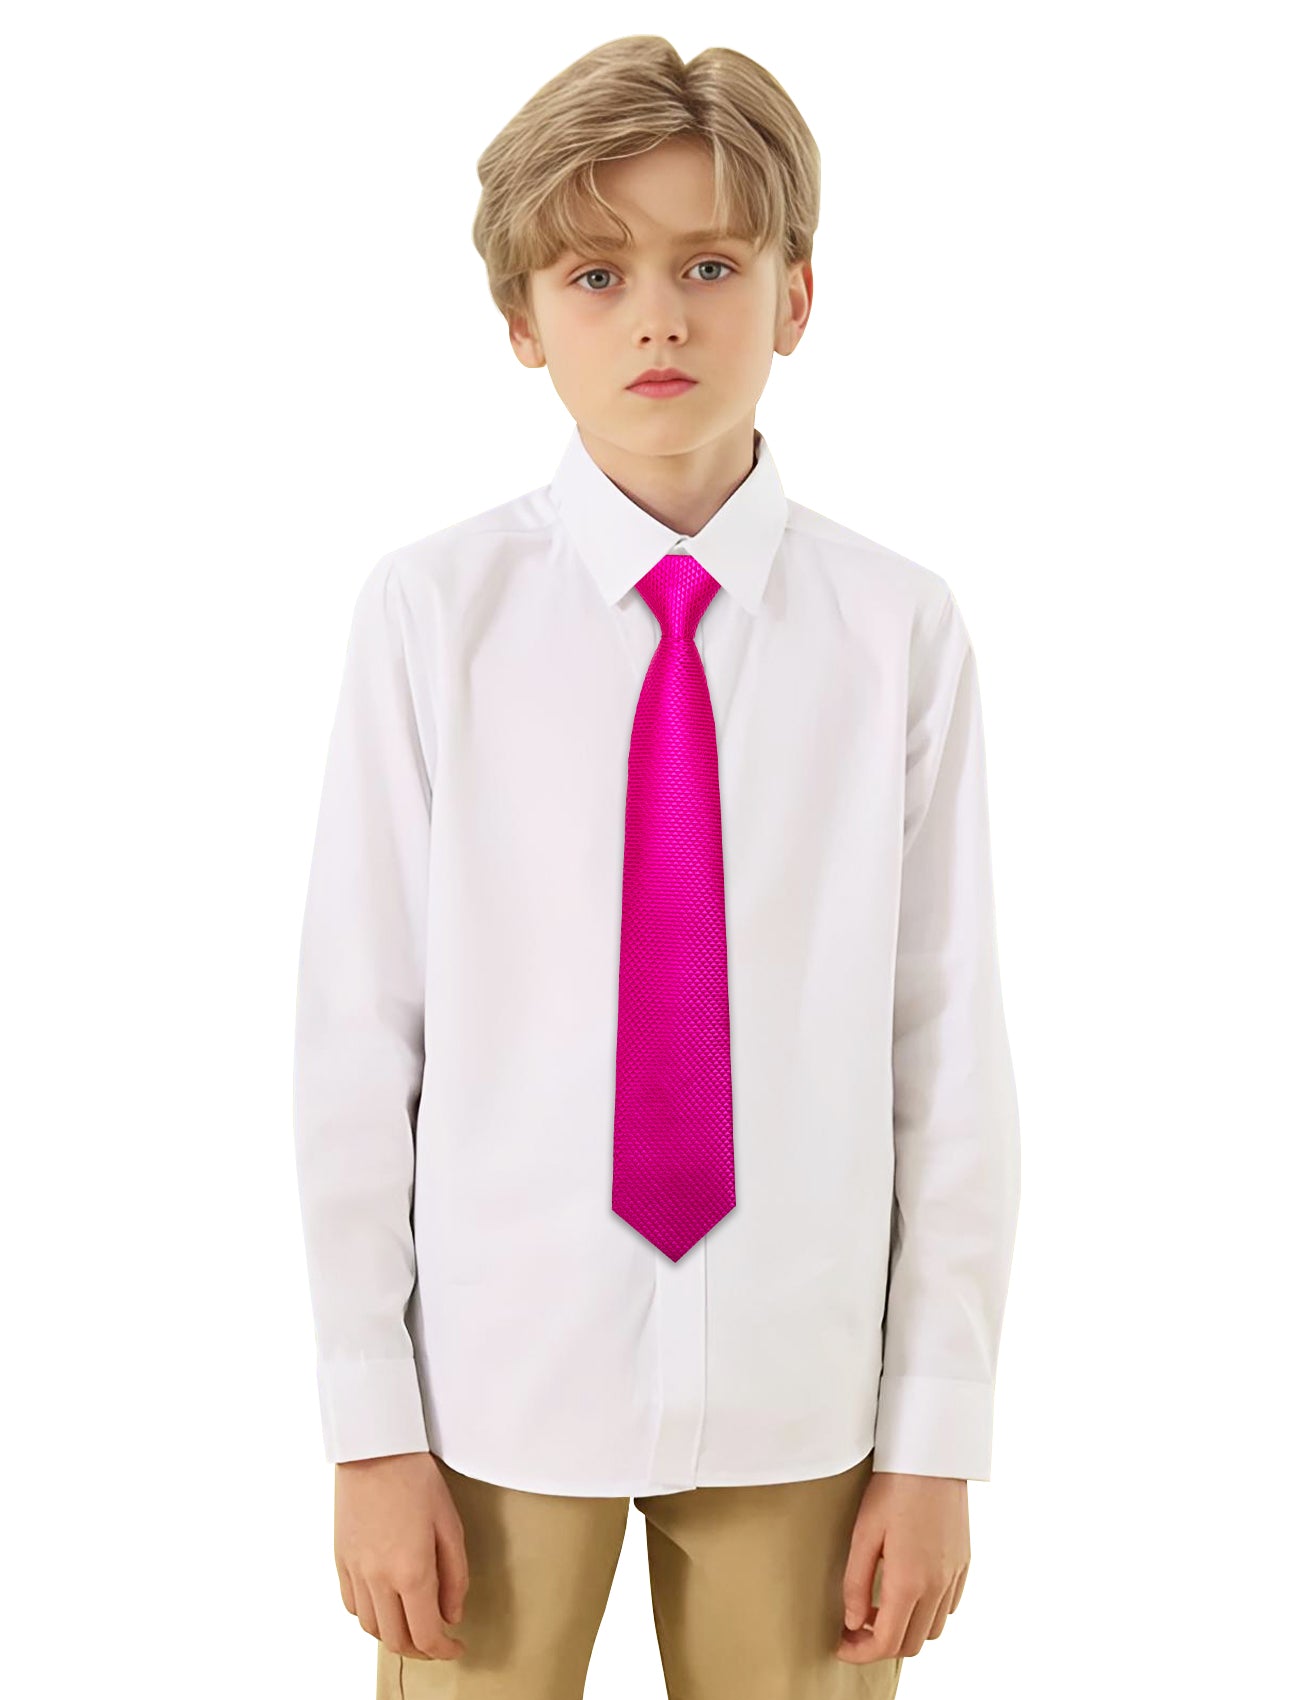 Barry.wang Kids Tie Rose Pink Solid Children's Tie Pocket Square Set